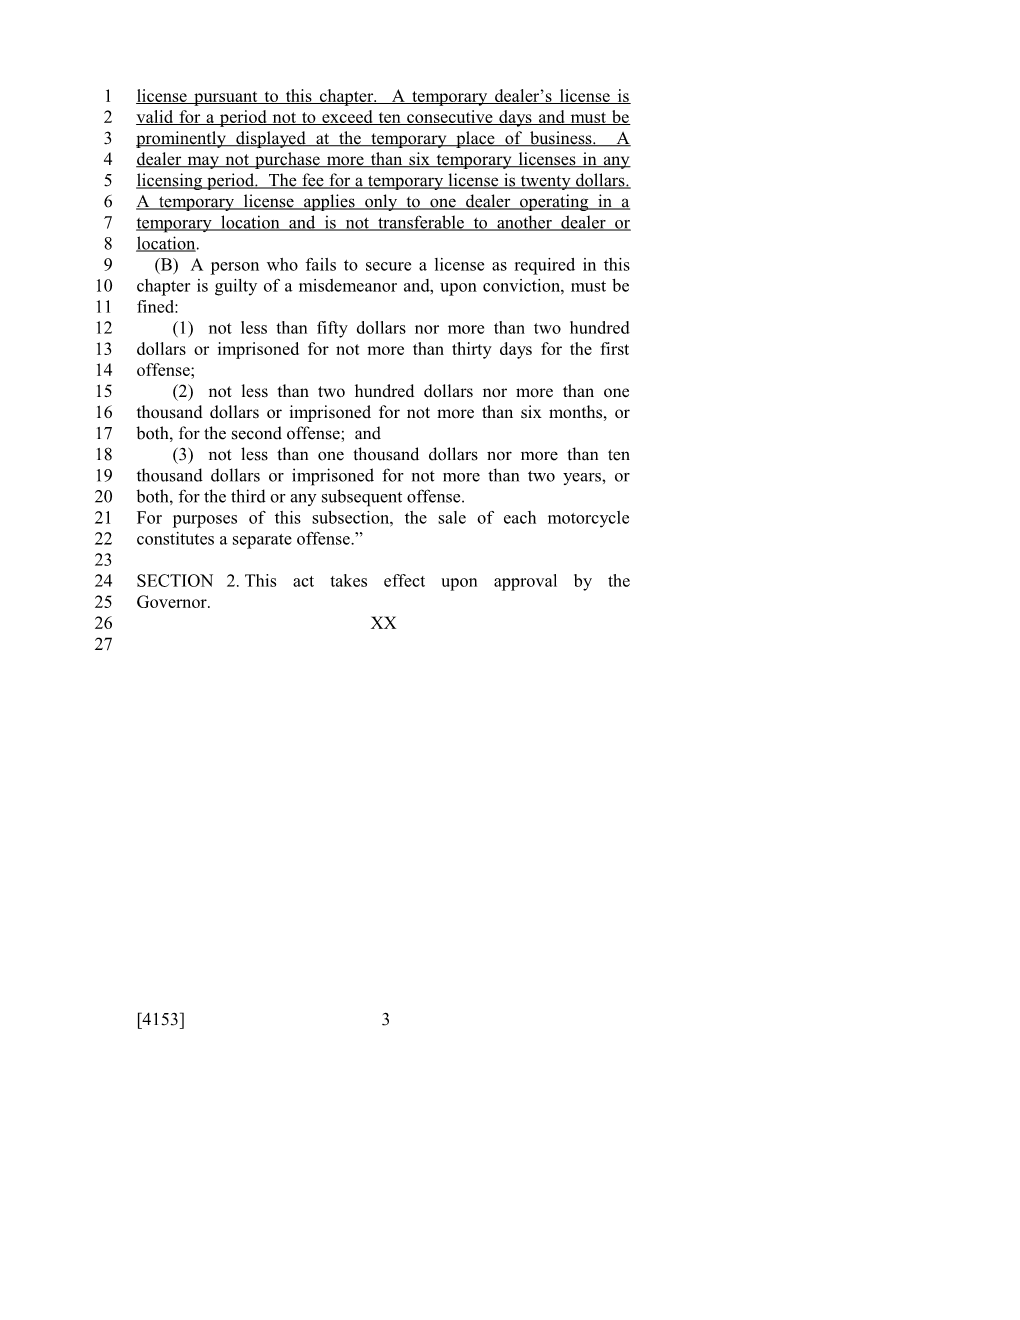 2011-2012 Bill 4153: Motorcycle Dealers - South Carolina Legislature Online